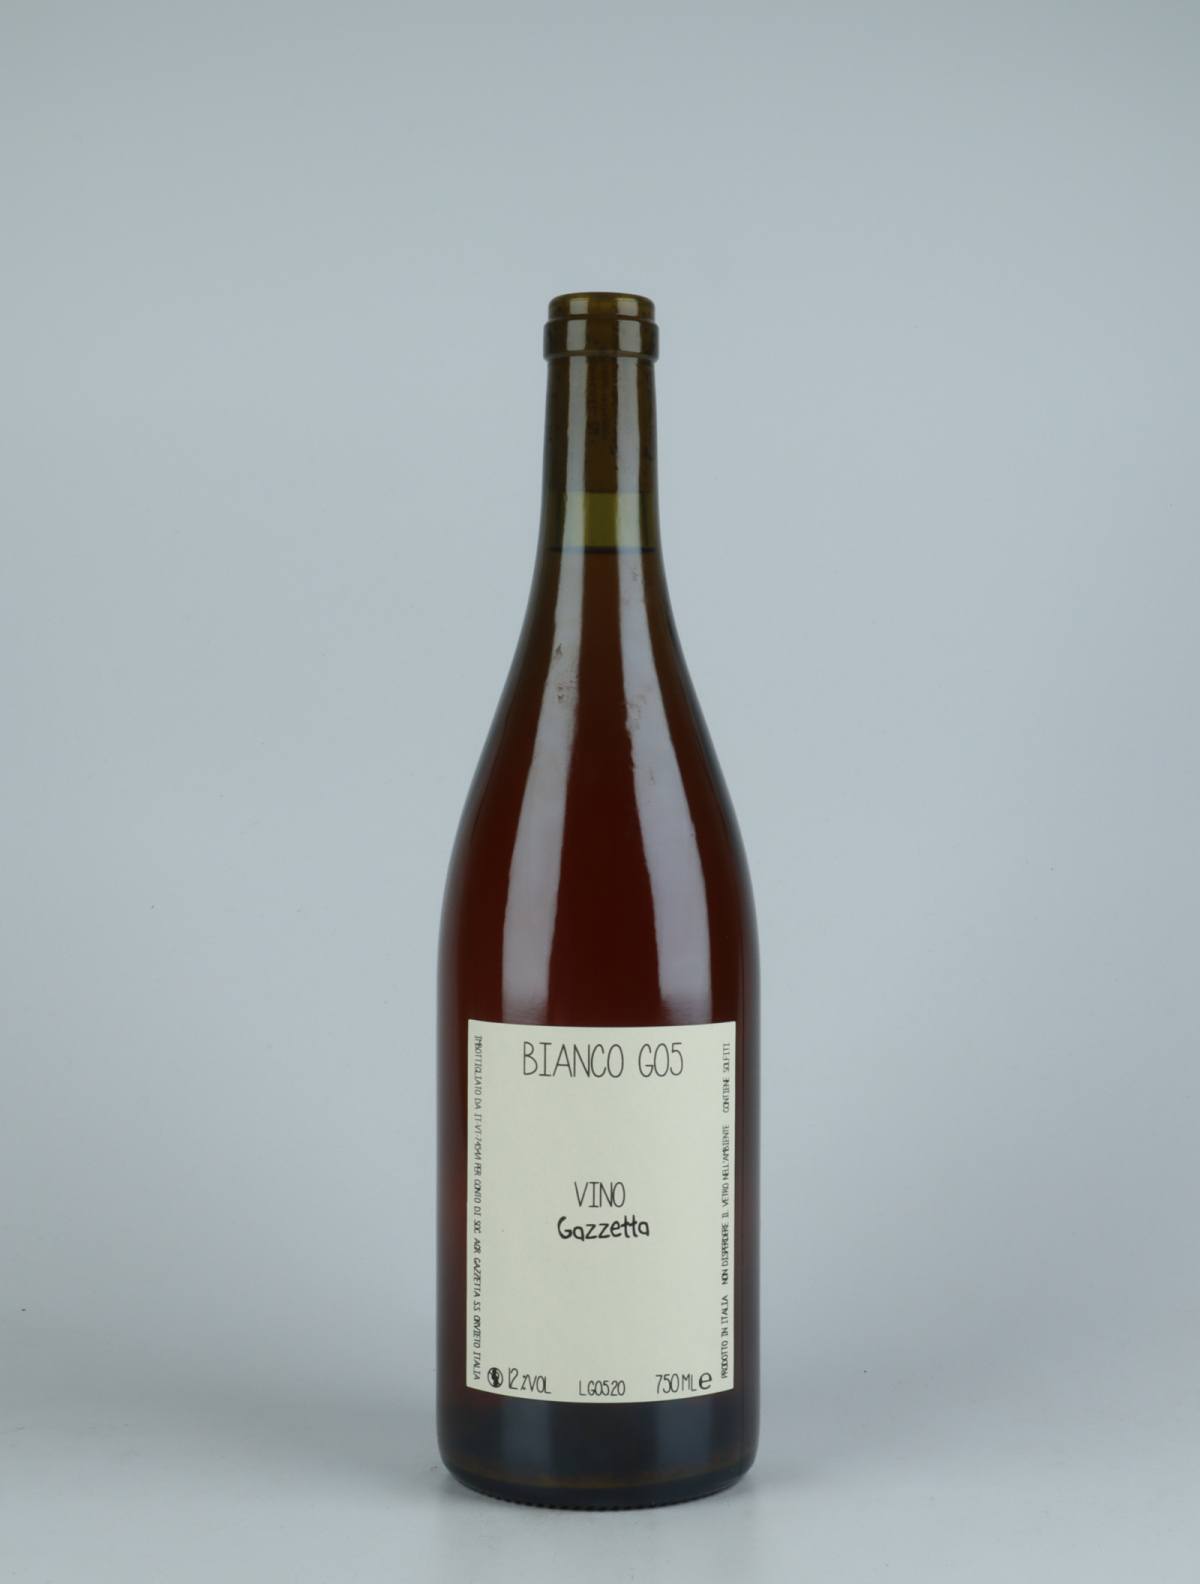 A bottle 2020 Vino Bianco G05 Orange wine from Gazzetta, Lazio in Italy